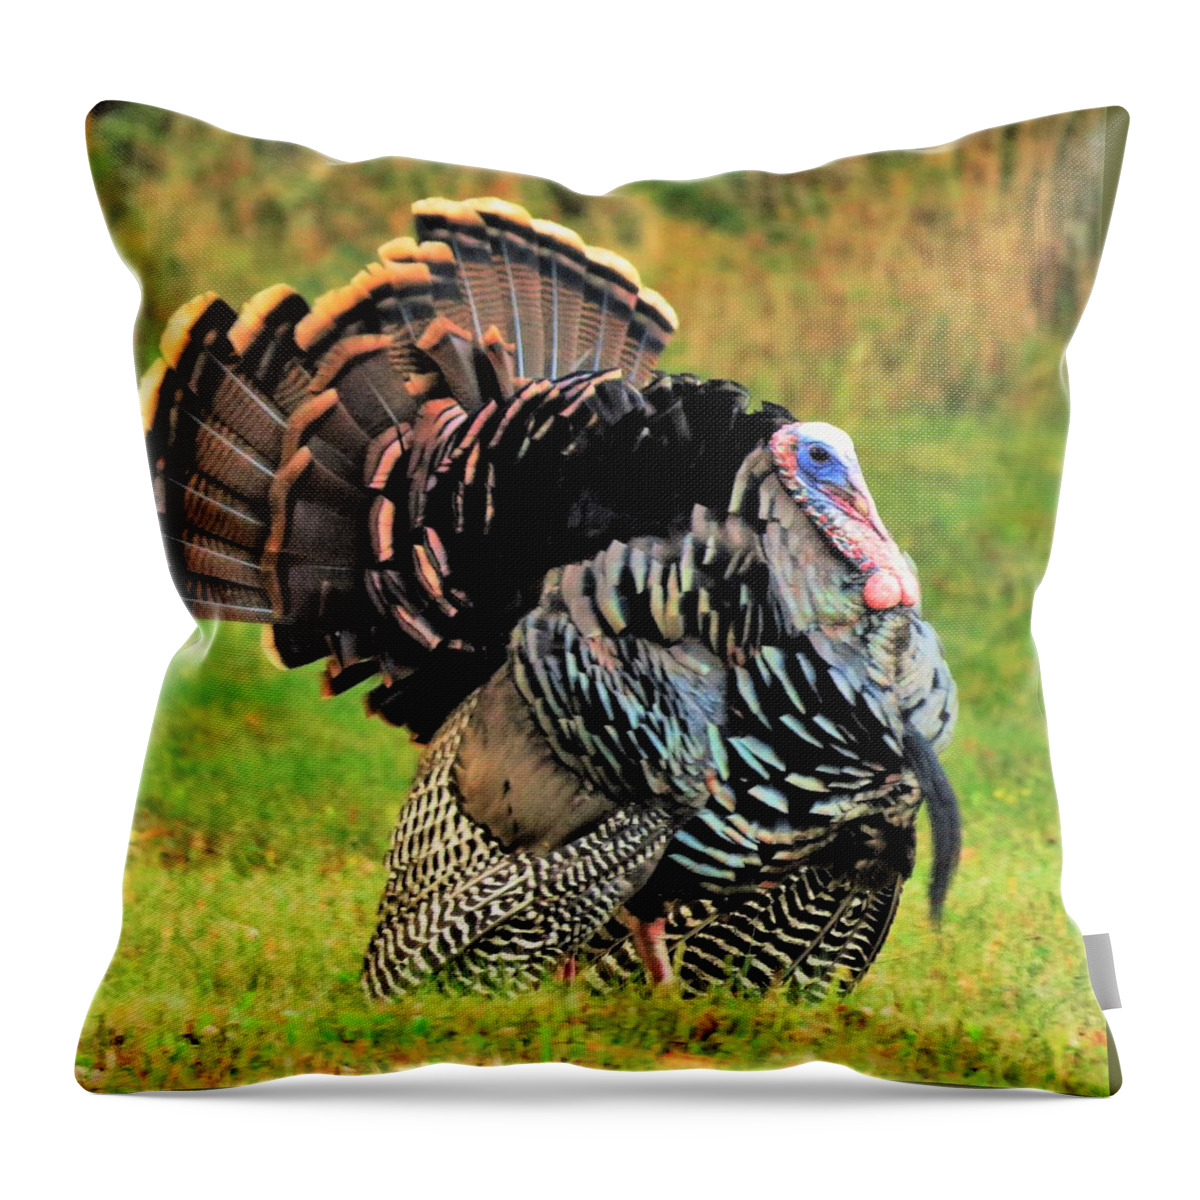 Turkeys Throw Pillow featuring the photograph Tom Turkey by Lori Frisch